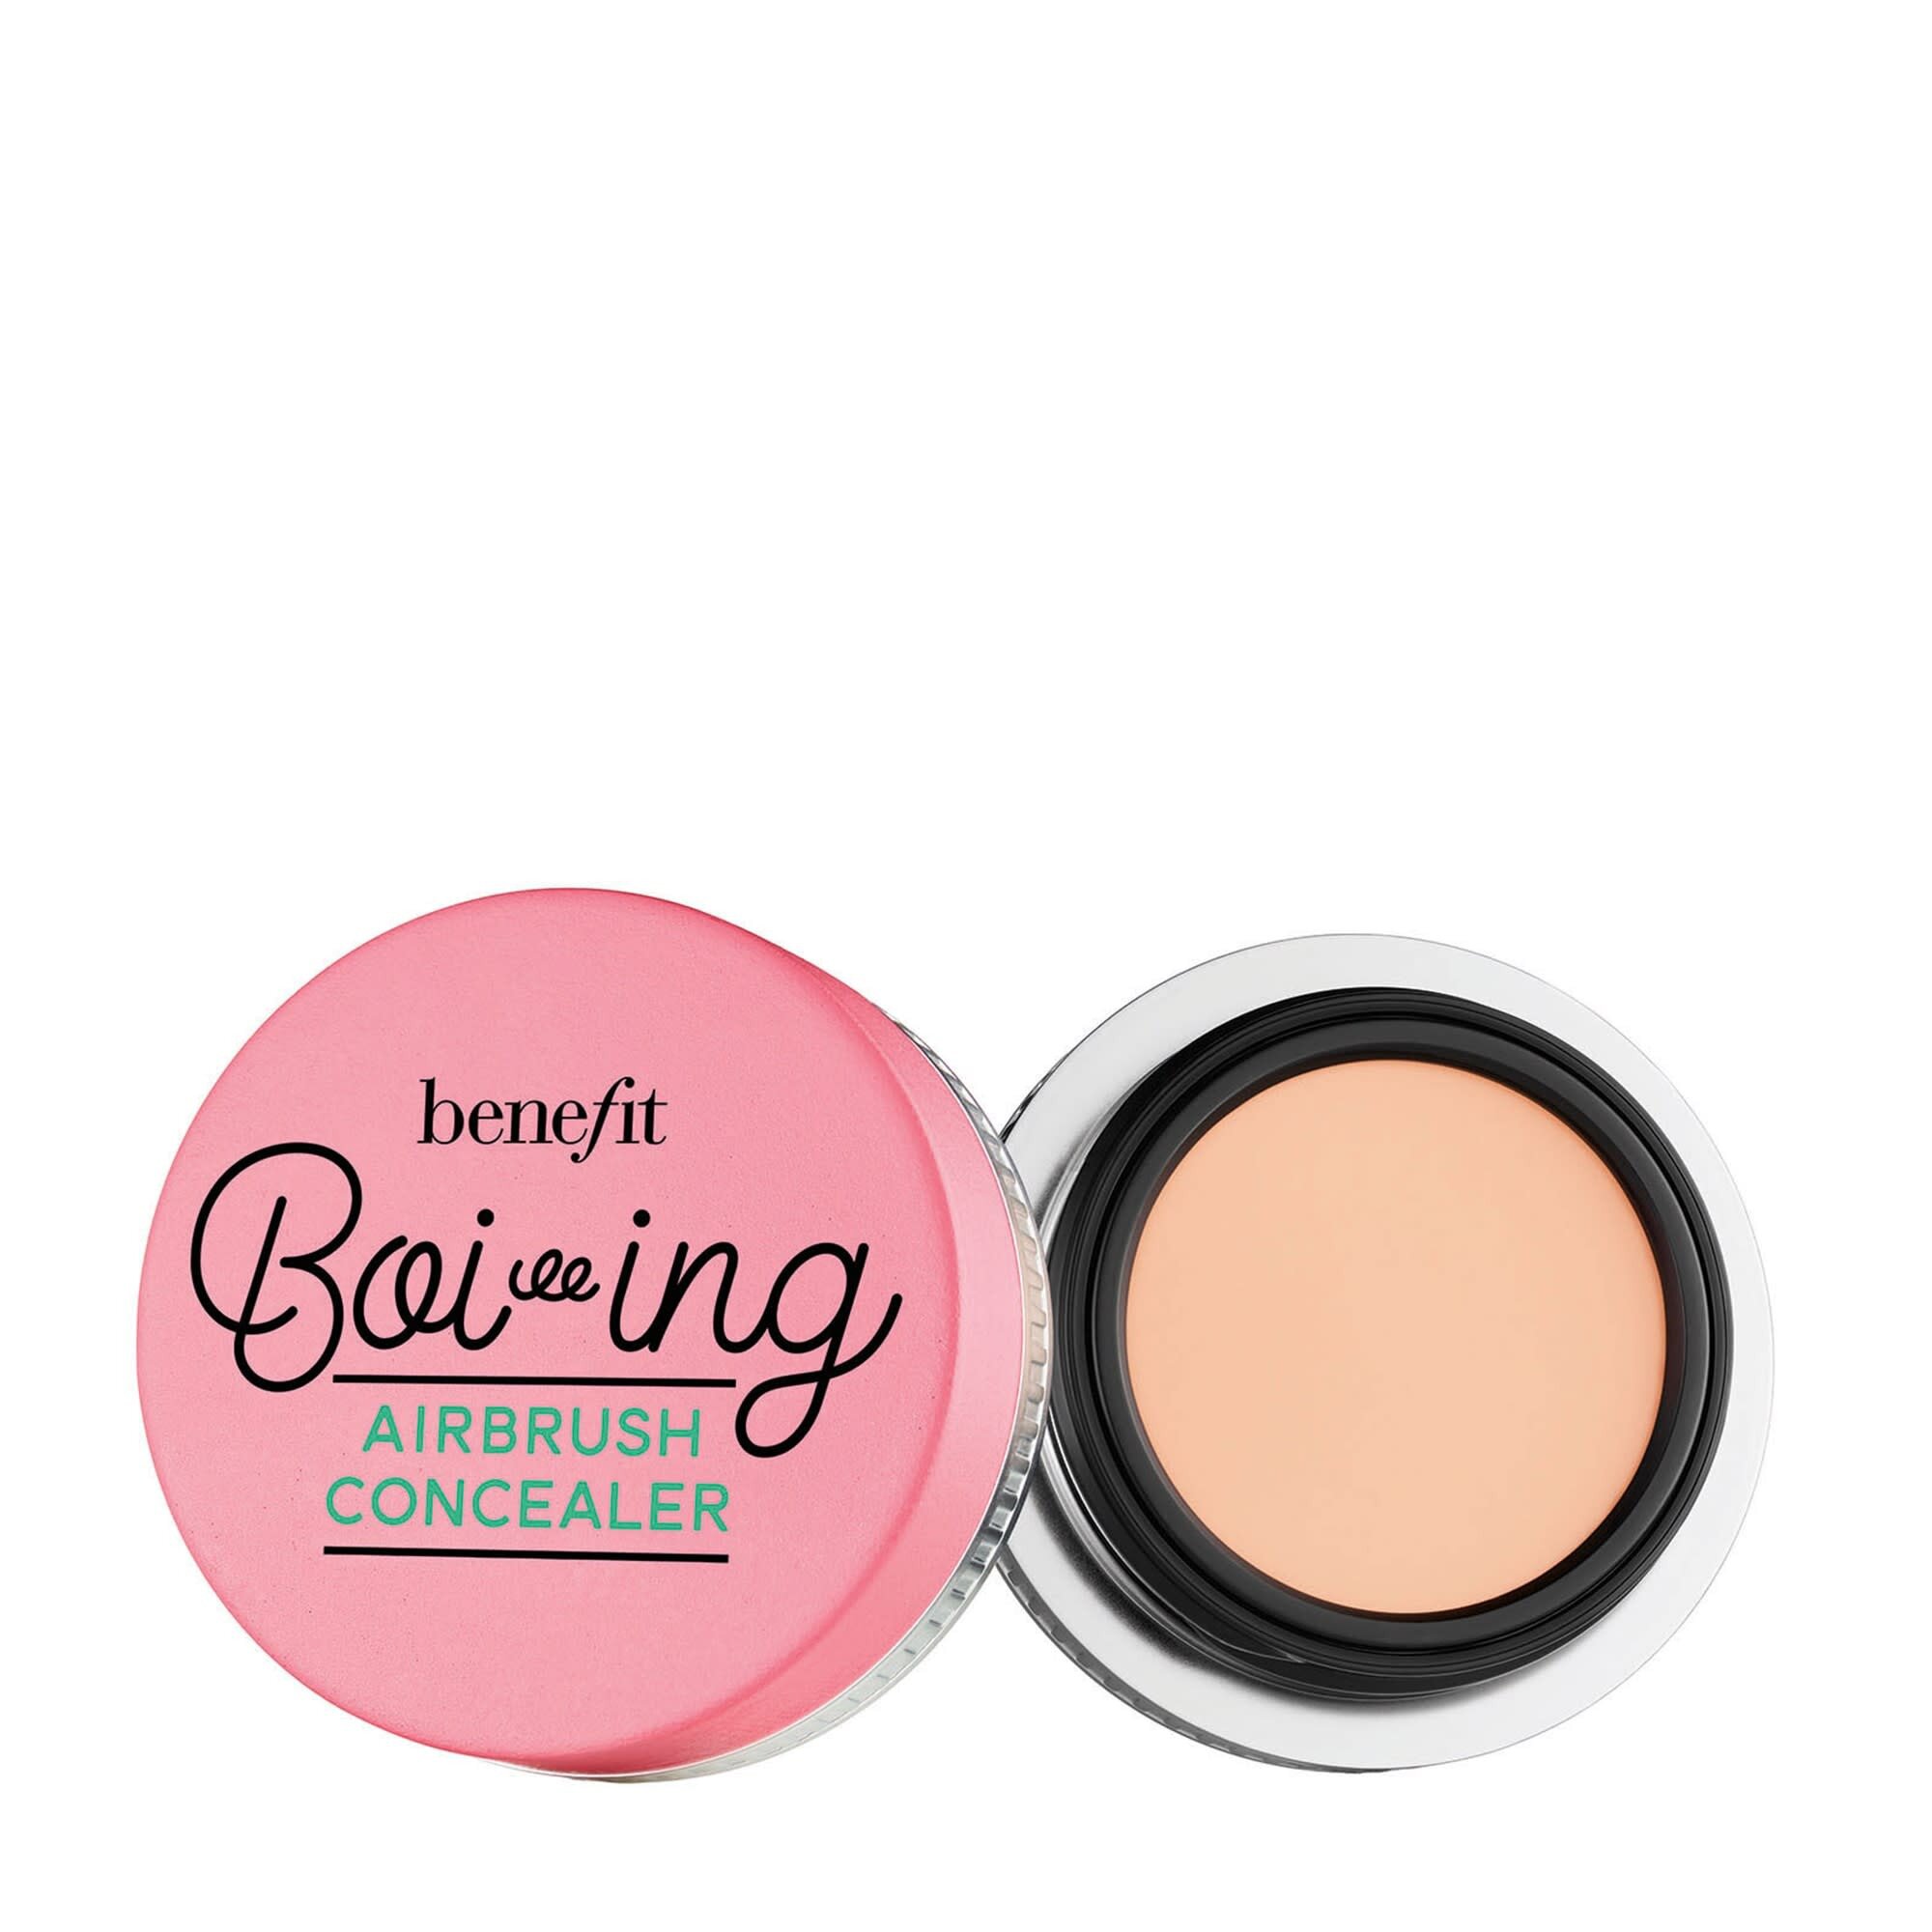 massefylde vandring farvestof Buy Benefit Cosmetics Boi-ing Airbrush Concealer - 01 Light online  Worldwide - Tejar.com